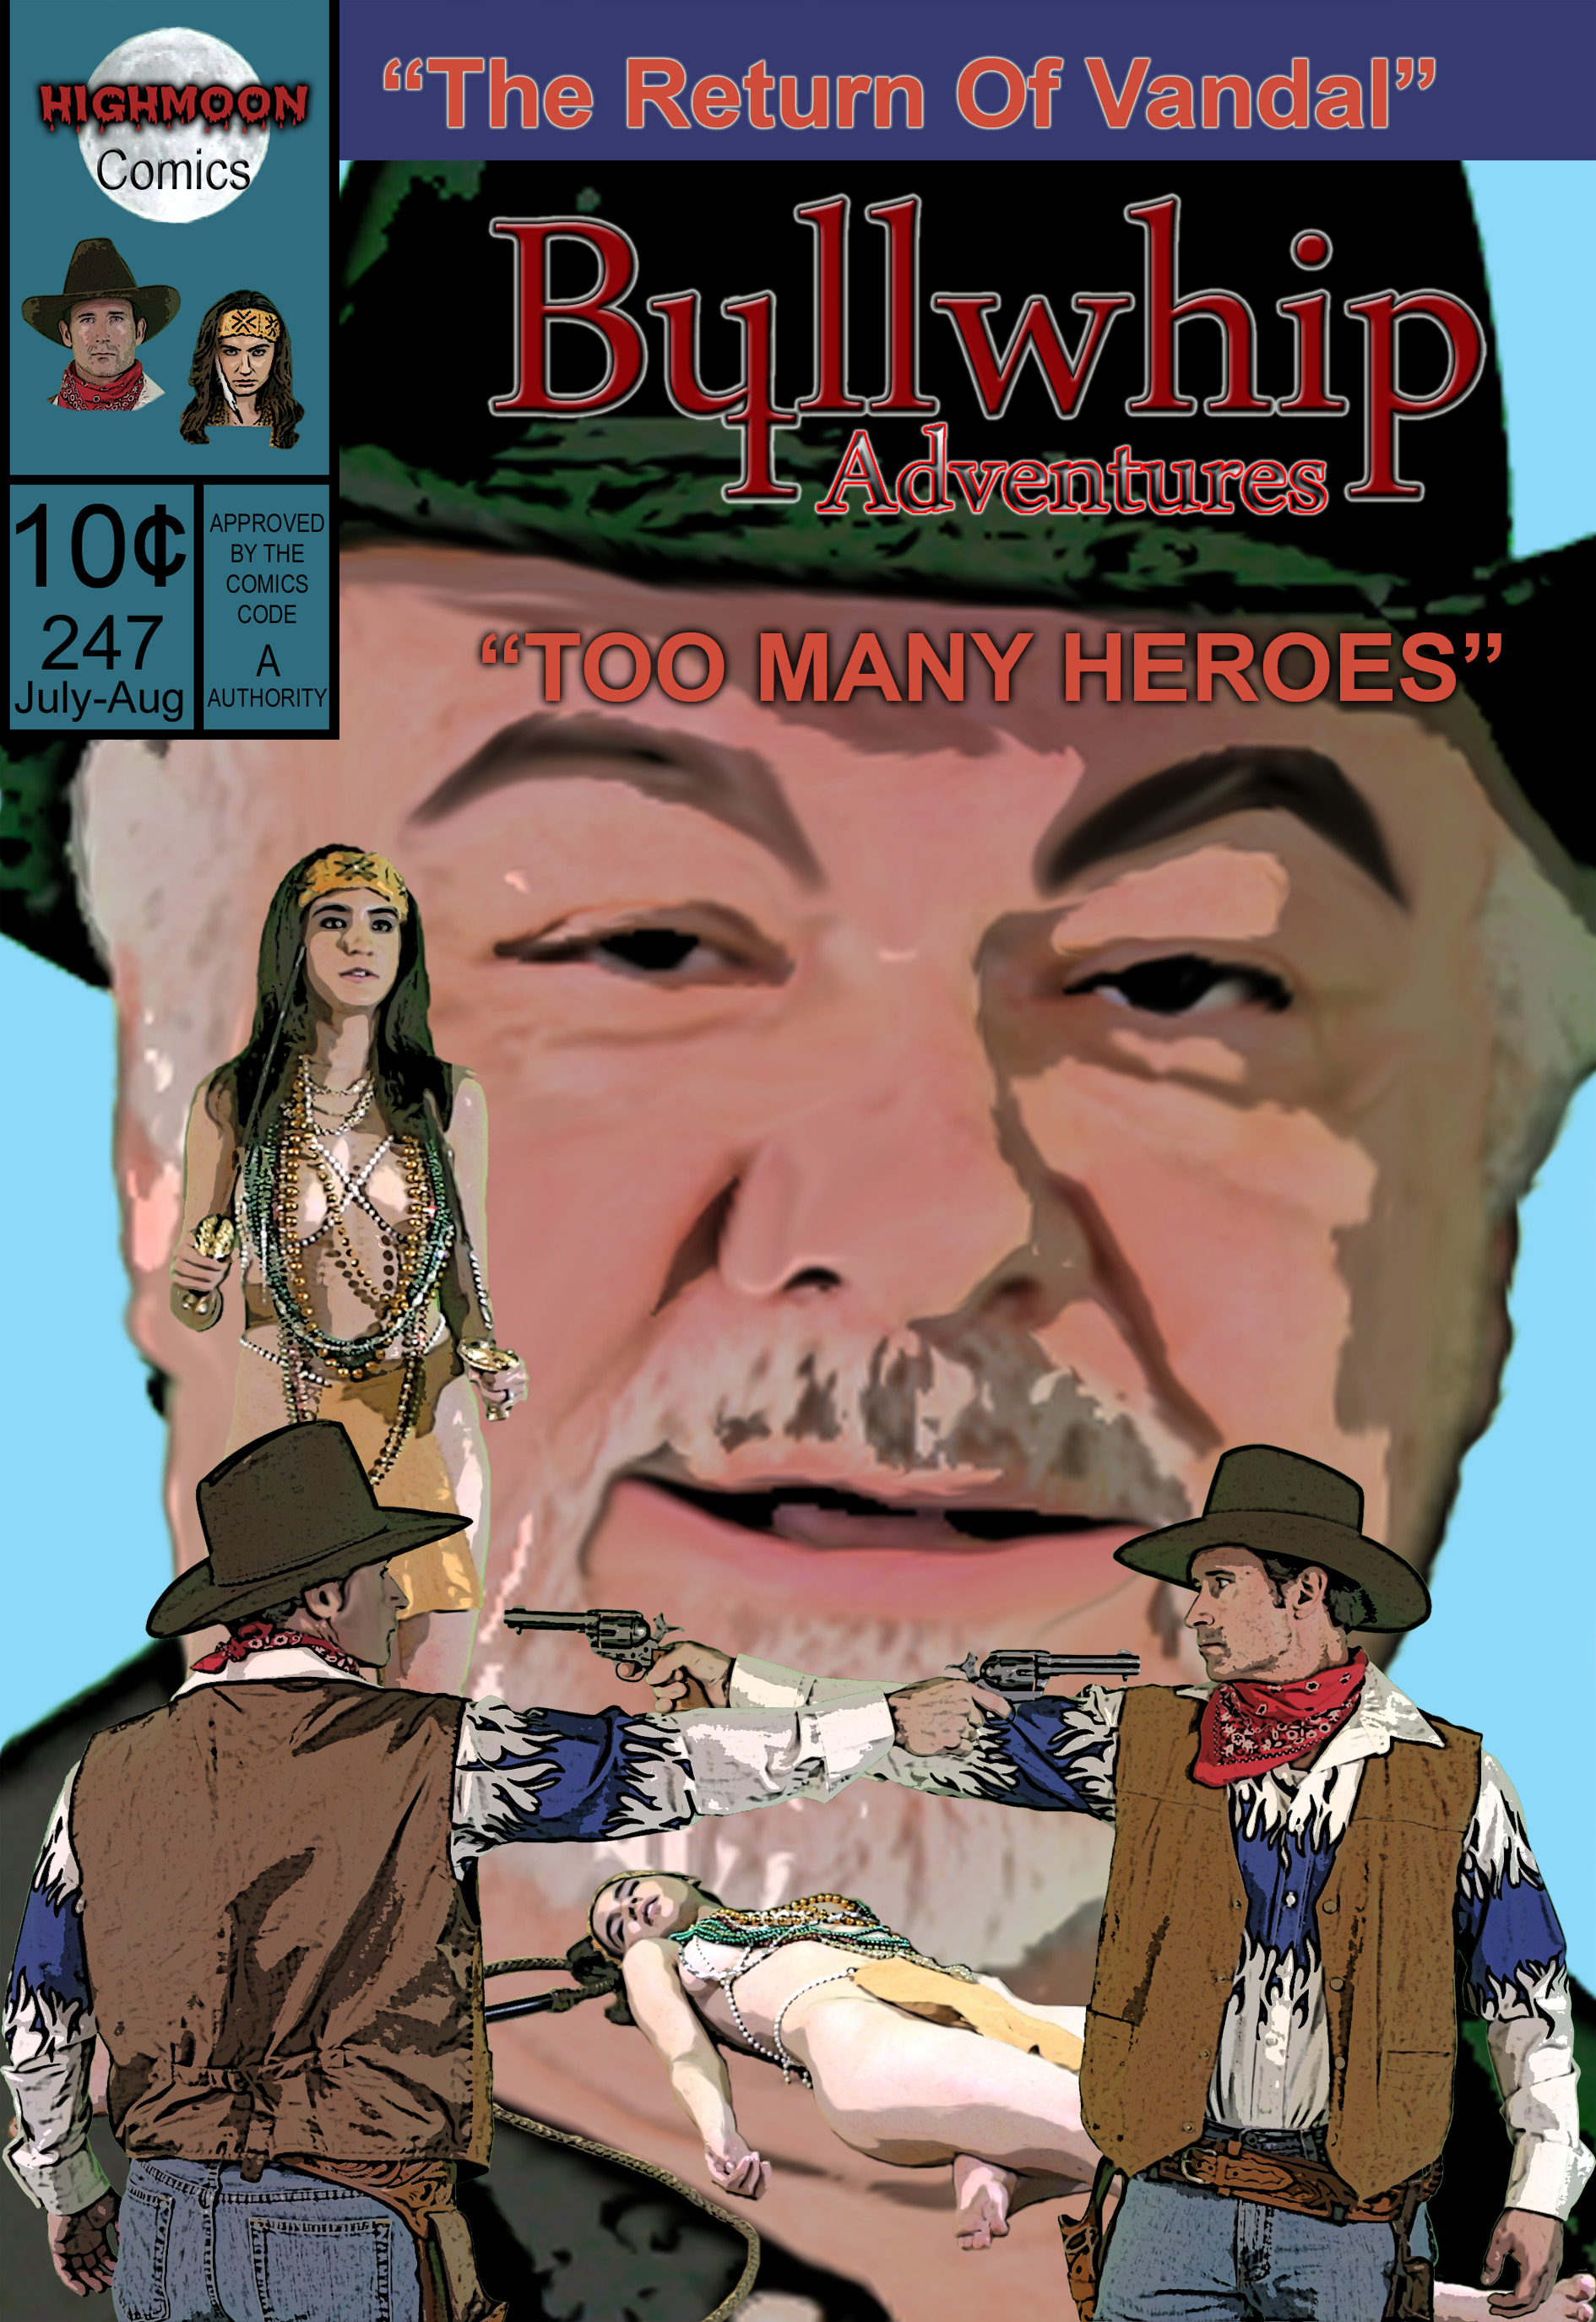 Bullwhip Adventures #247 comic cover